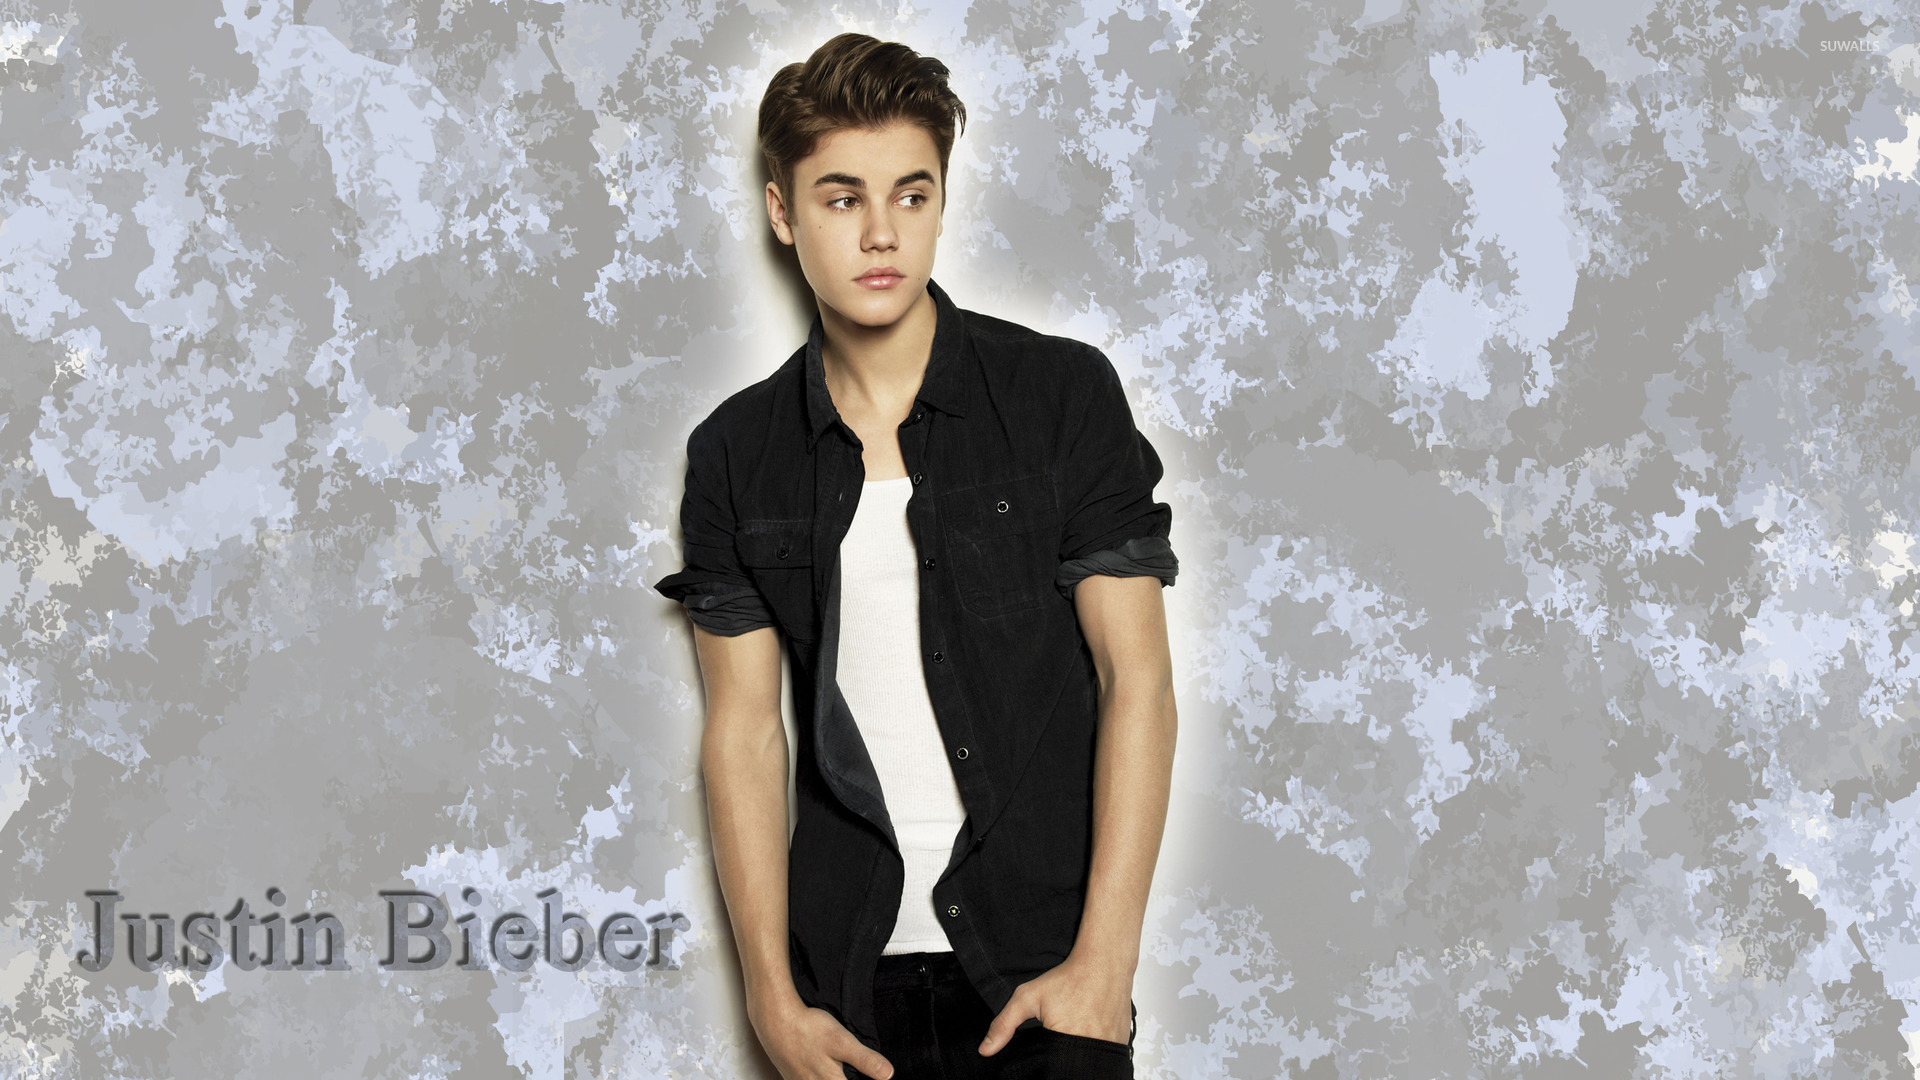 Justin Bieber Wallpaper Male Celebrity